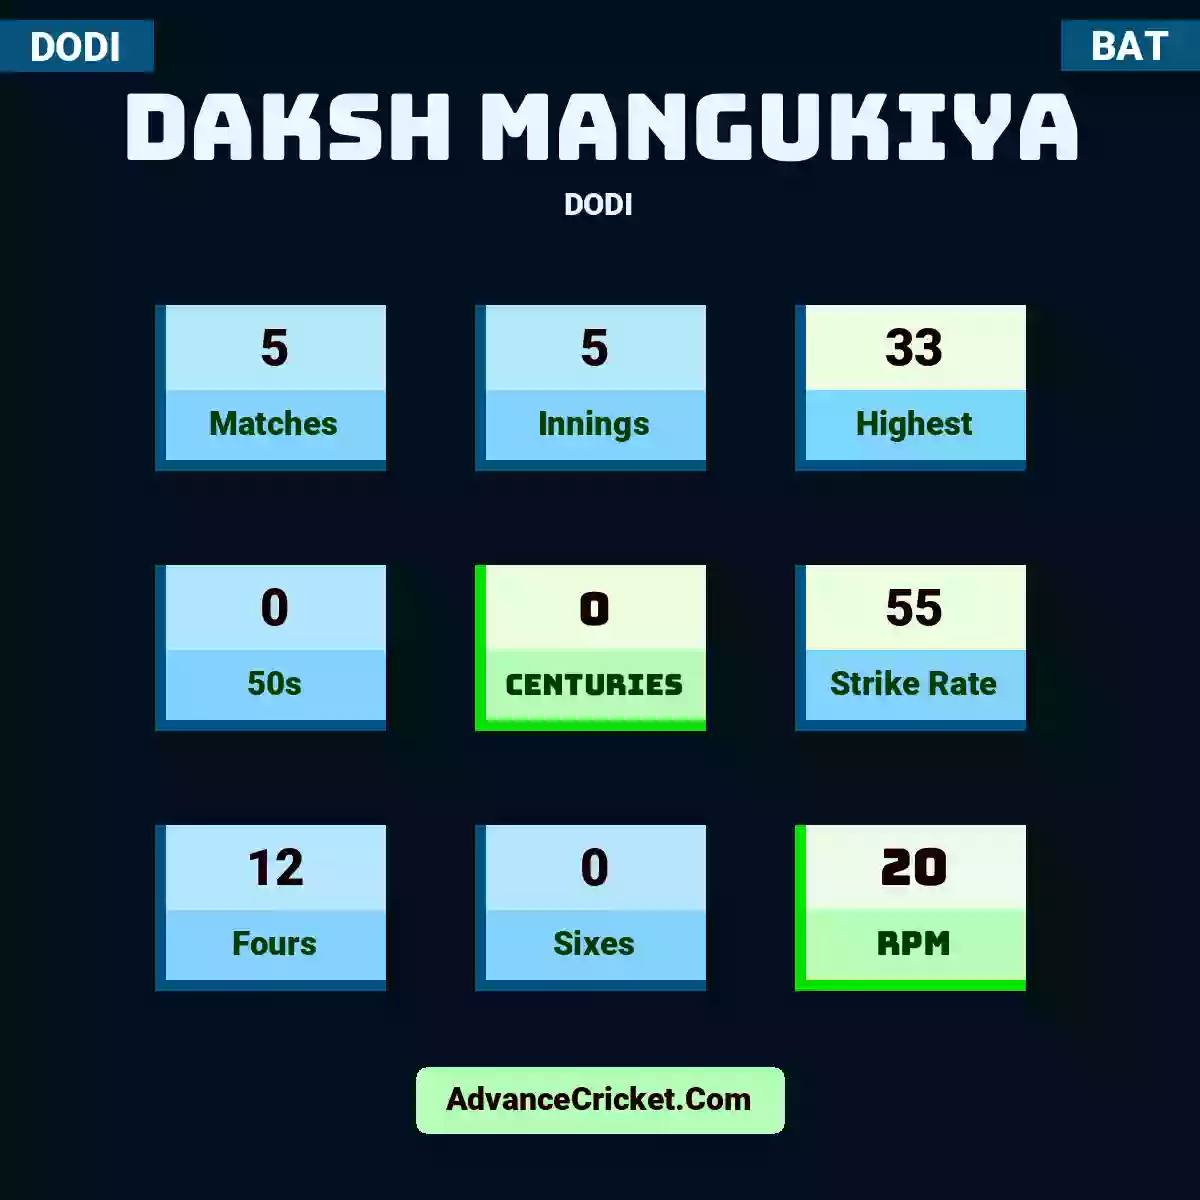 Daksh Mangukiya DODI , Daksh Mangukiya played 5 matches, scored 33 runs as highest, 0 half-centuries, and 0 centuries, with a strike rate of 55. D.Mangukiya hit 12 fours and 0 sixes, with an RPM of 20.